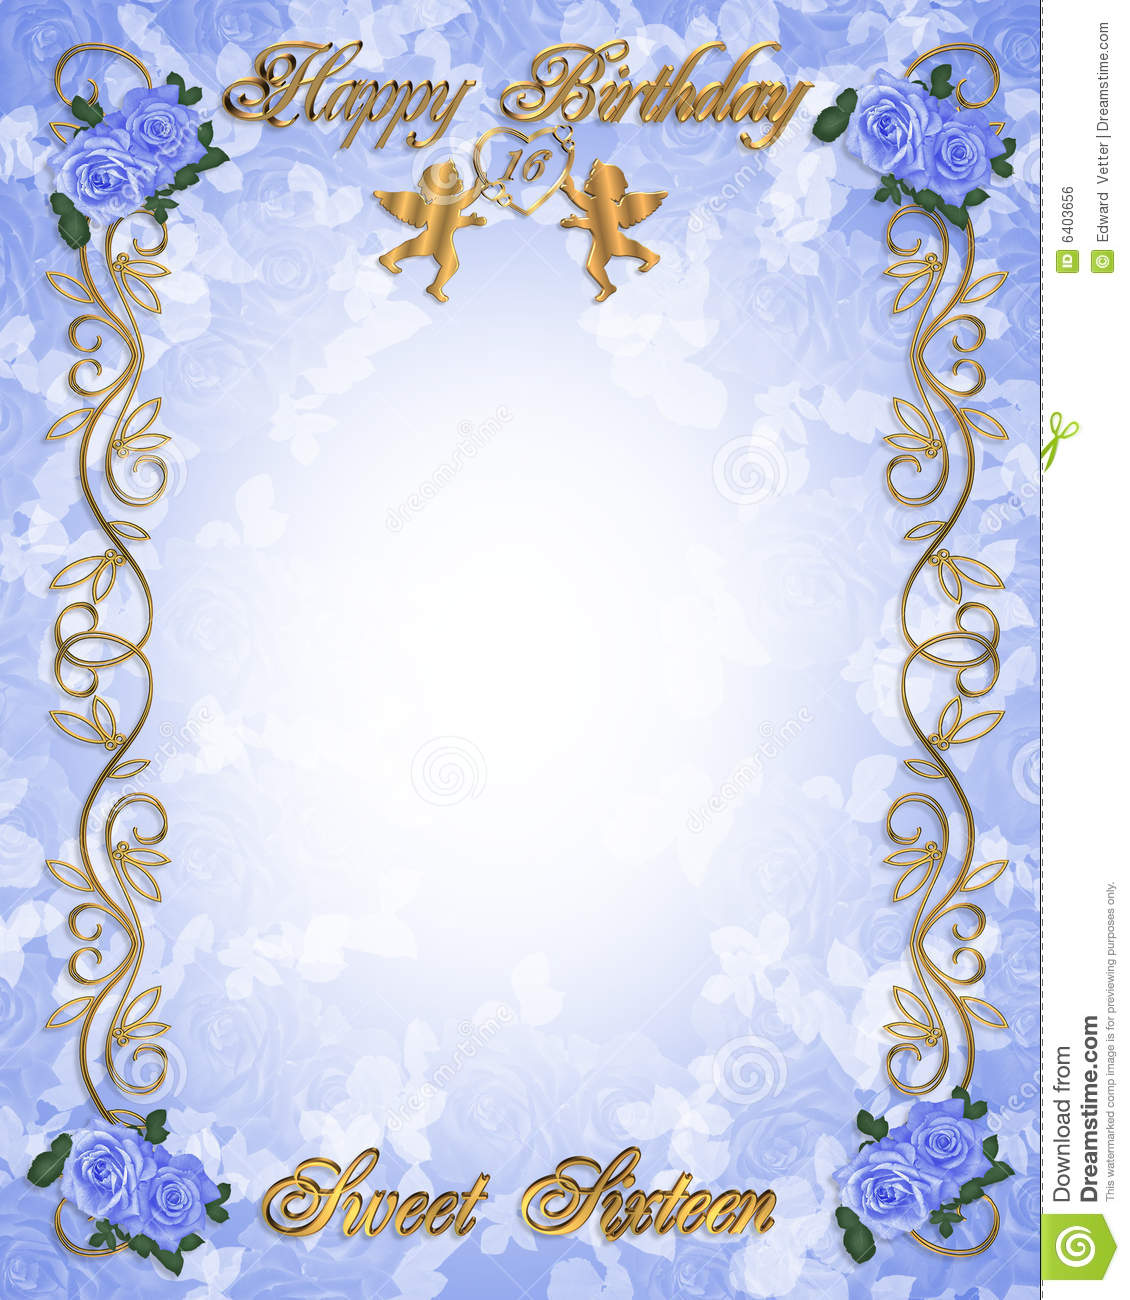 Birthday Invitation Sweet 16 Blue Royalty Free Stock Image   Image    